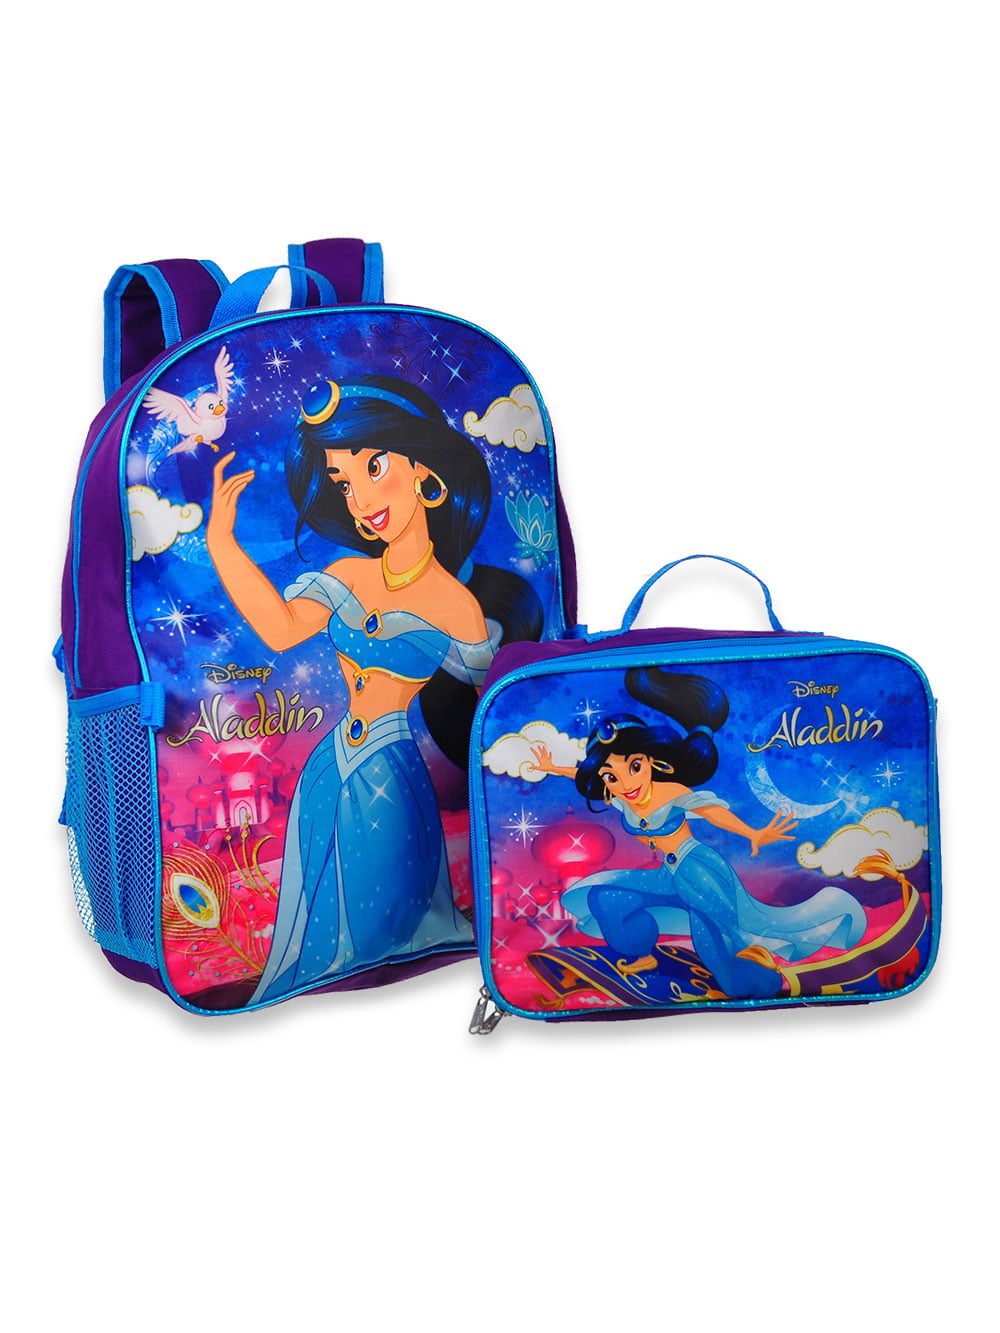 Disney Princess Jasmine Girls School Backpack Lunch Box Book Bag 5 Piece Aladdin